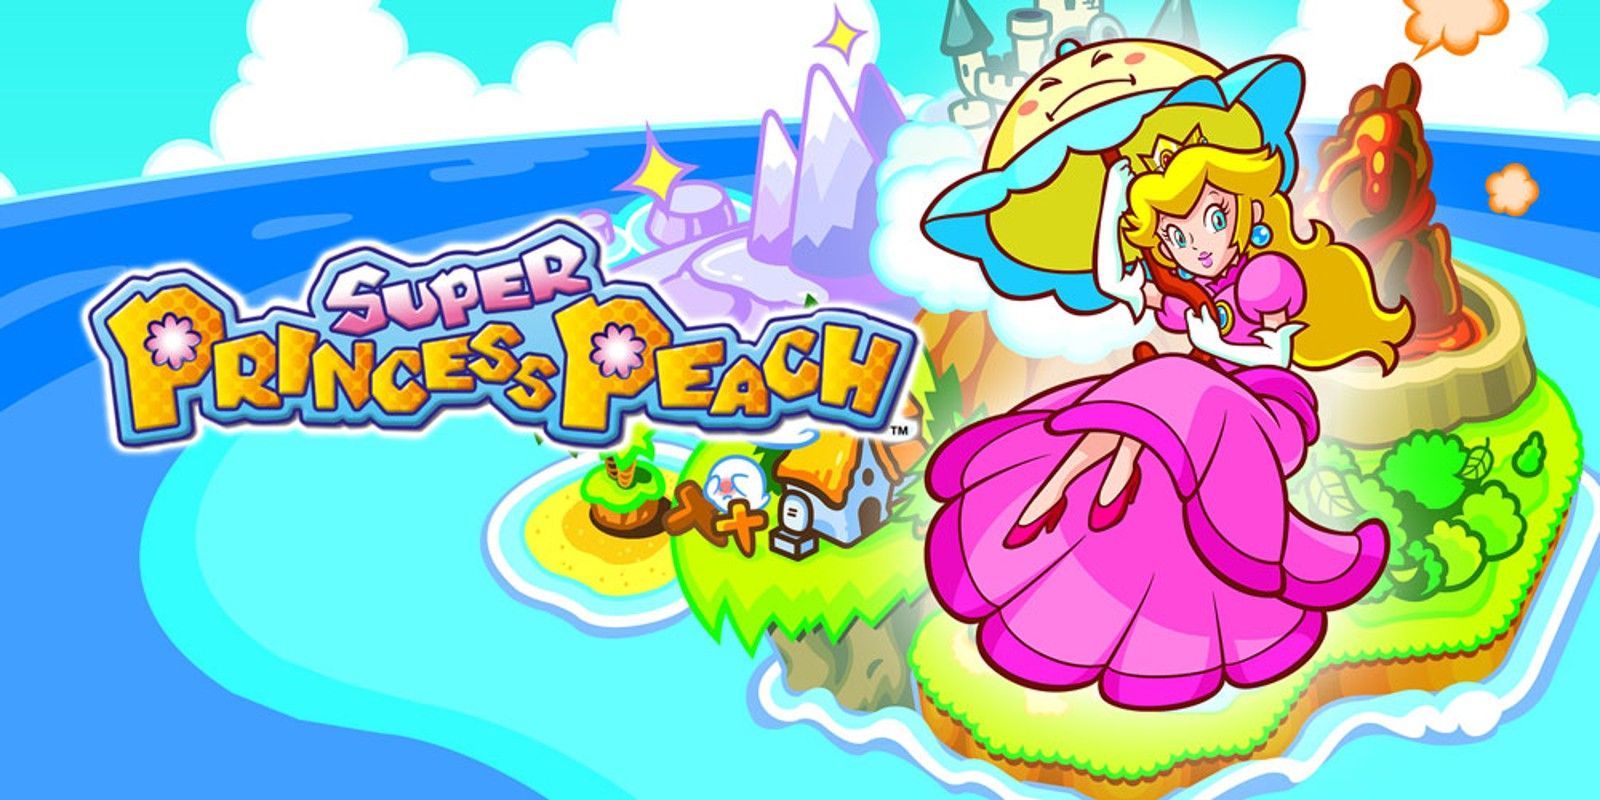 Peach And Perry In Super Princess Peach